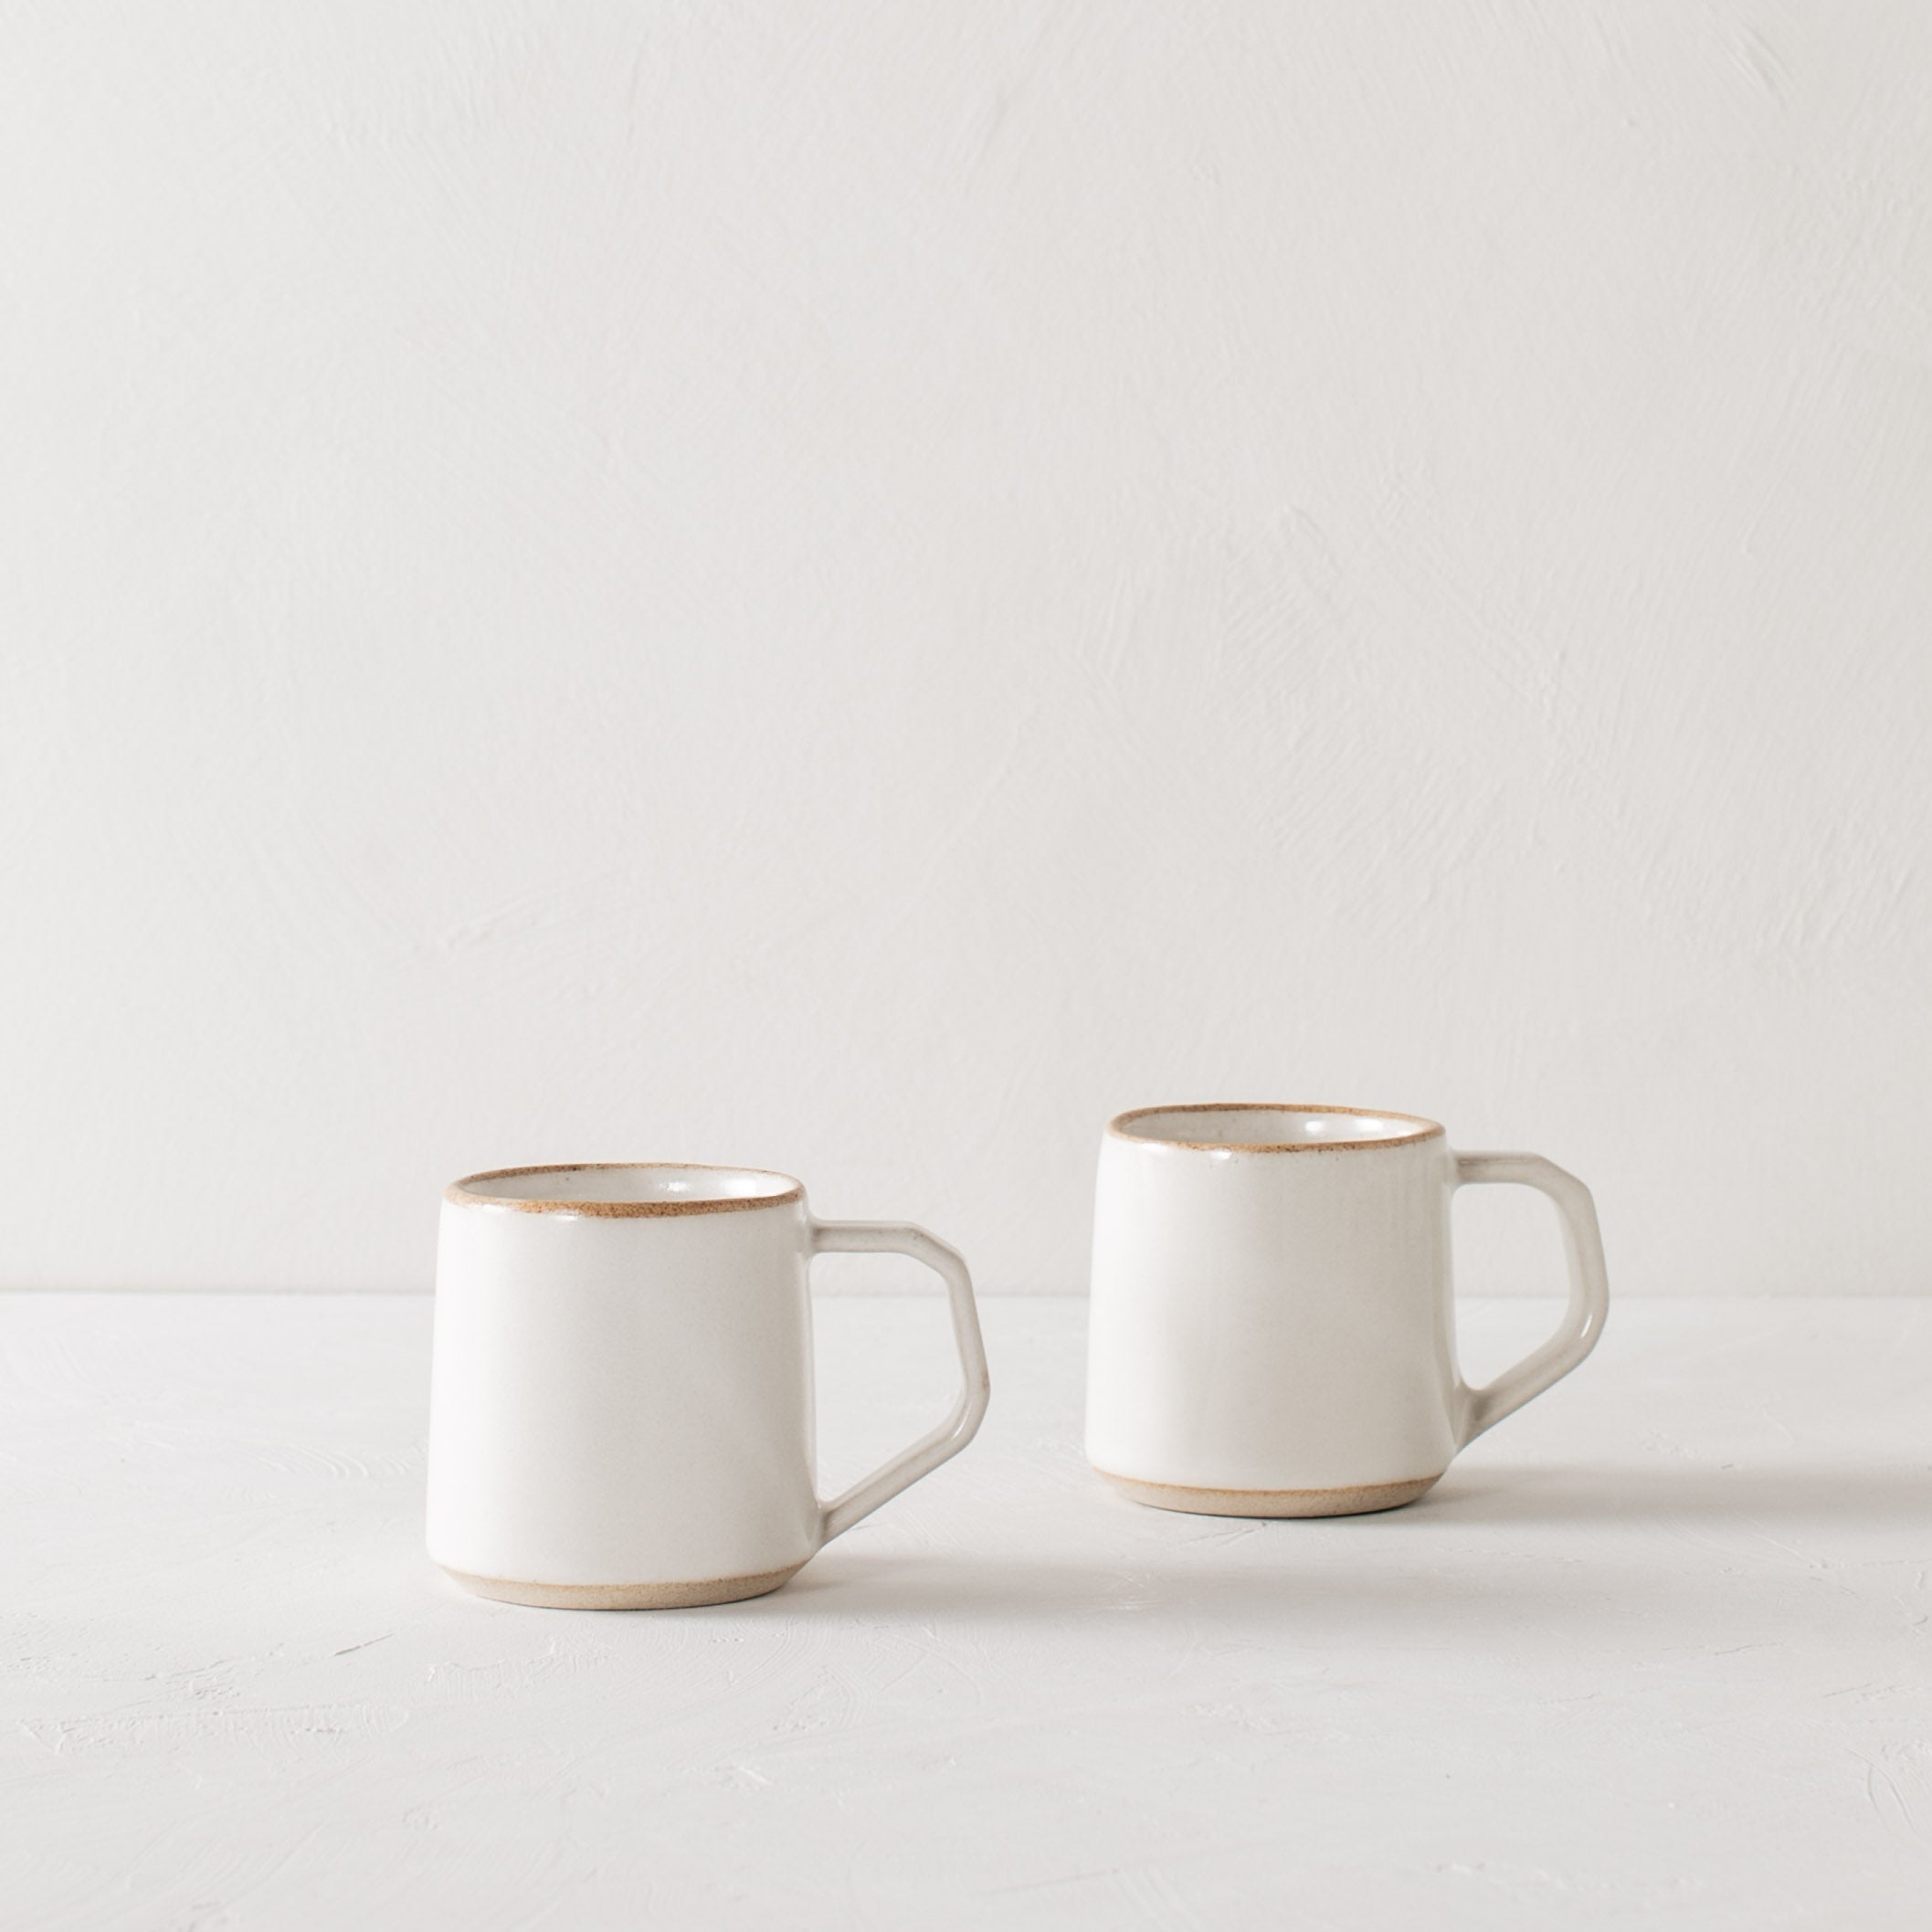 Two minimal white ceramic mugs. Mugs have an exposed stoneware rim and base. Handmade ceramic mugs designed and sold by Convivial Production, Kansas City Ceramics.